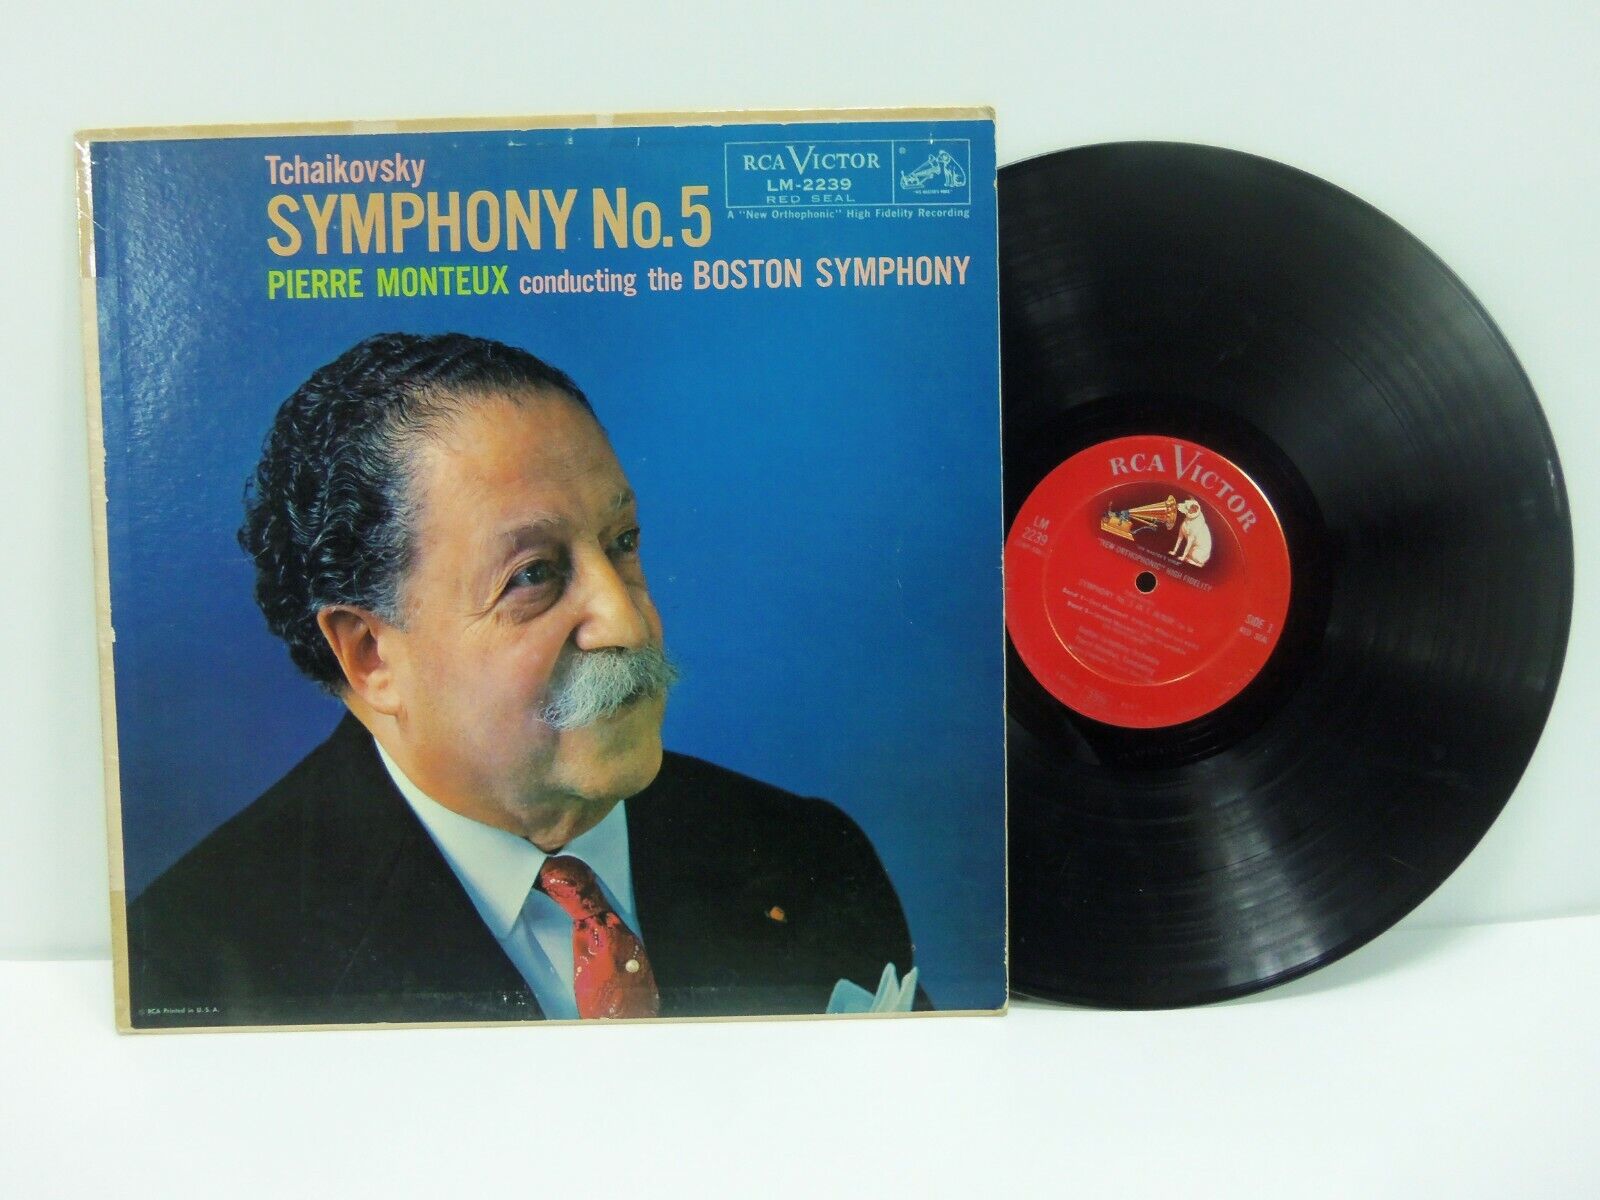 Tchaikovsky symphony no by pierre monteux conducting the boston symphony lp